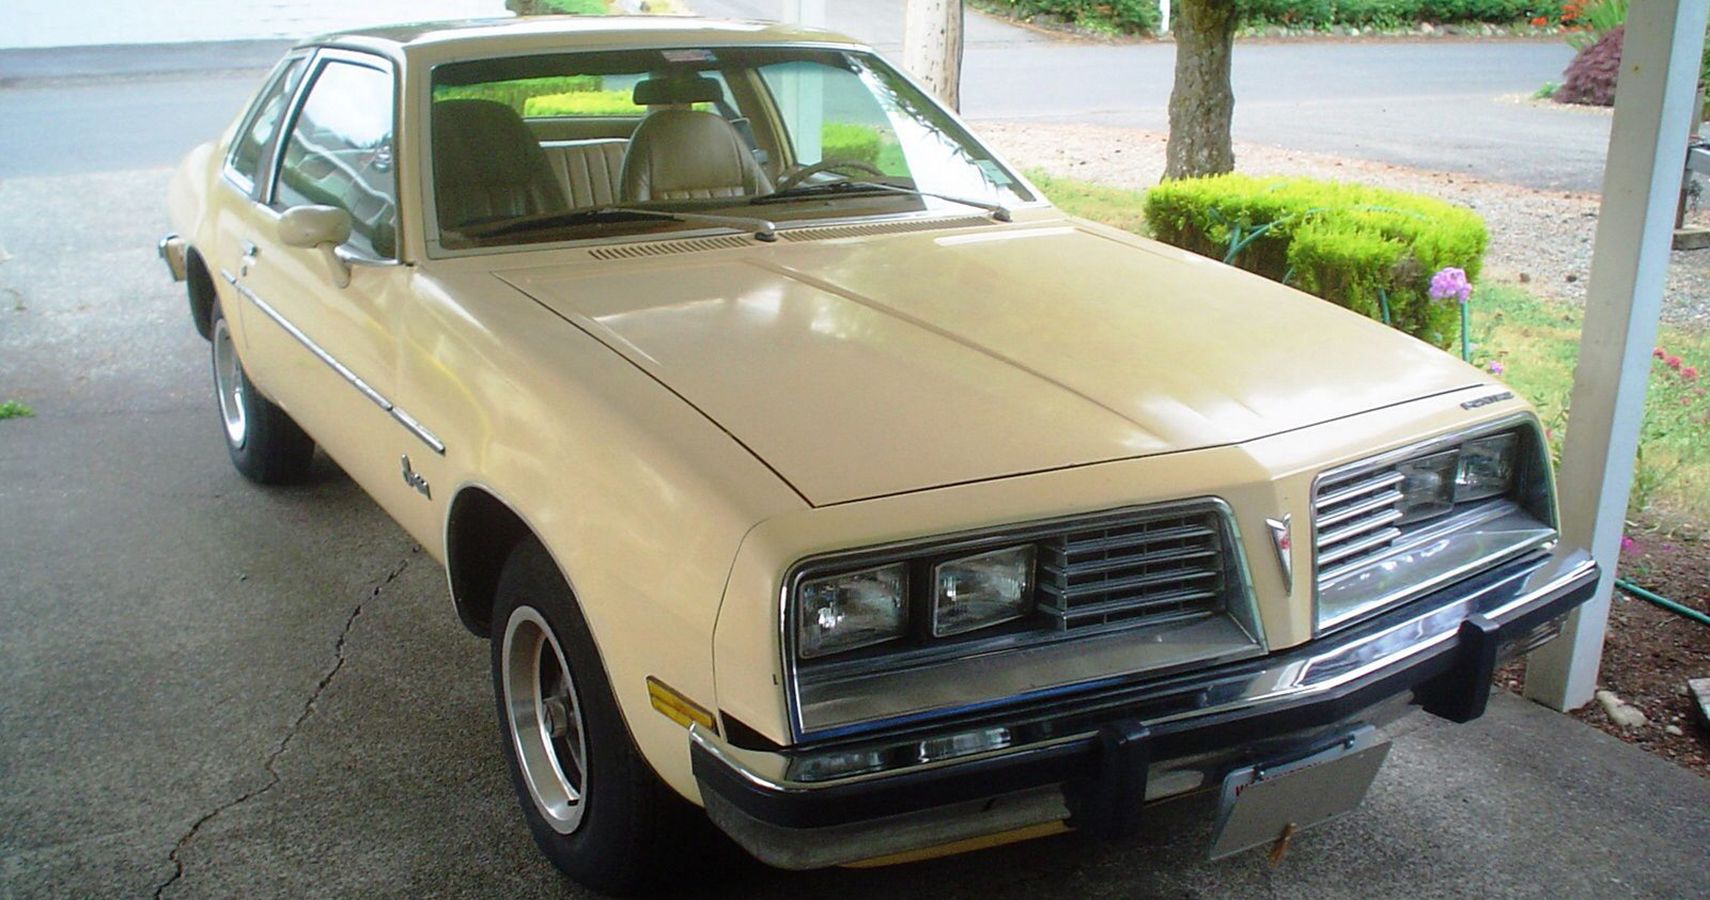 1982-1988 Pontiac Sunbird: Too Many Issues